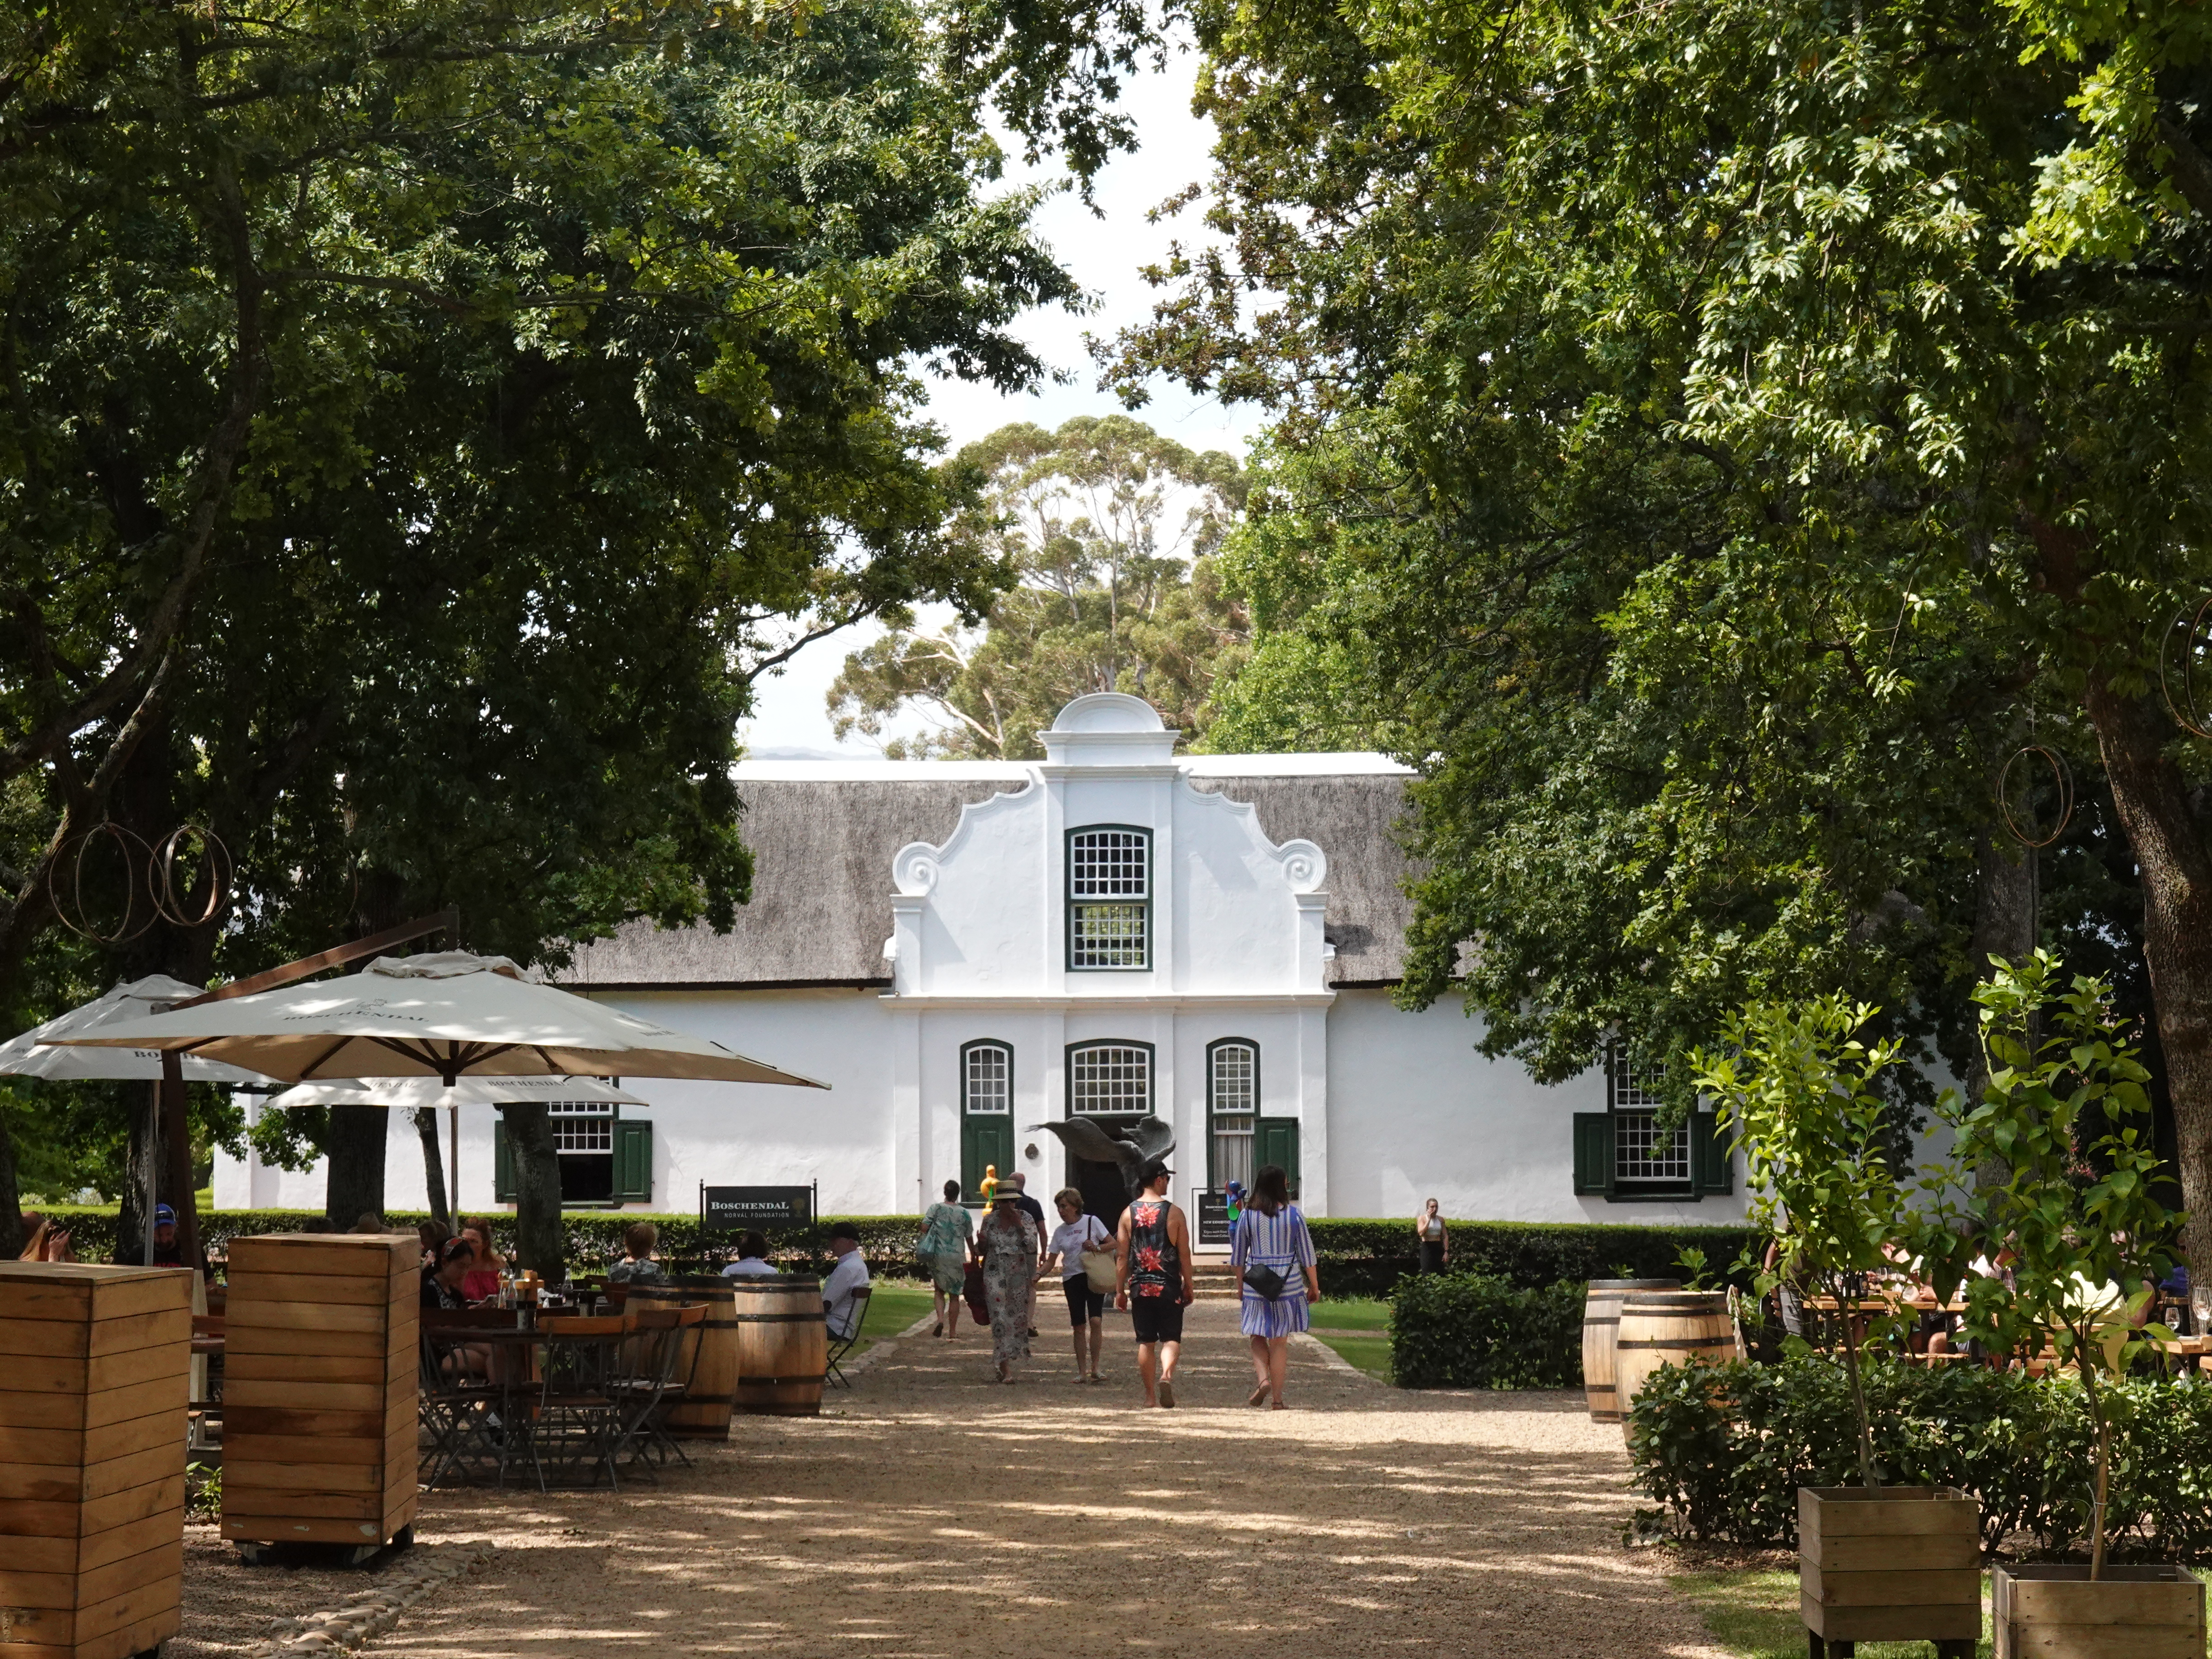 The center part of Boschendal Farm & Wine Estate